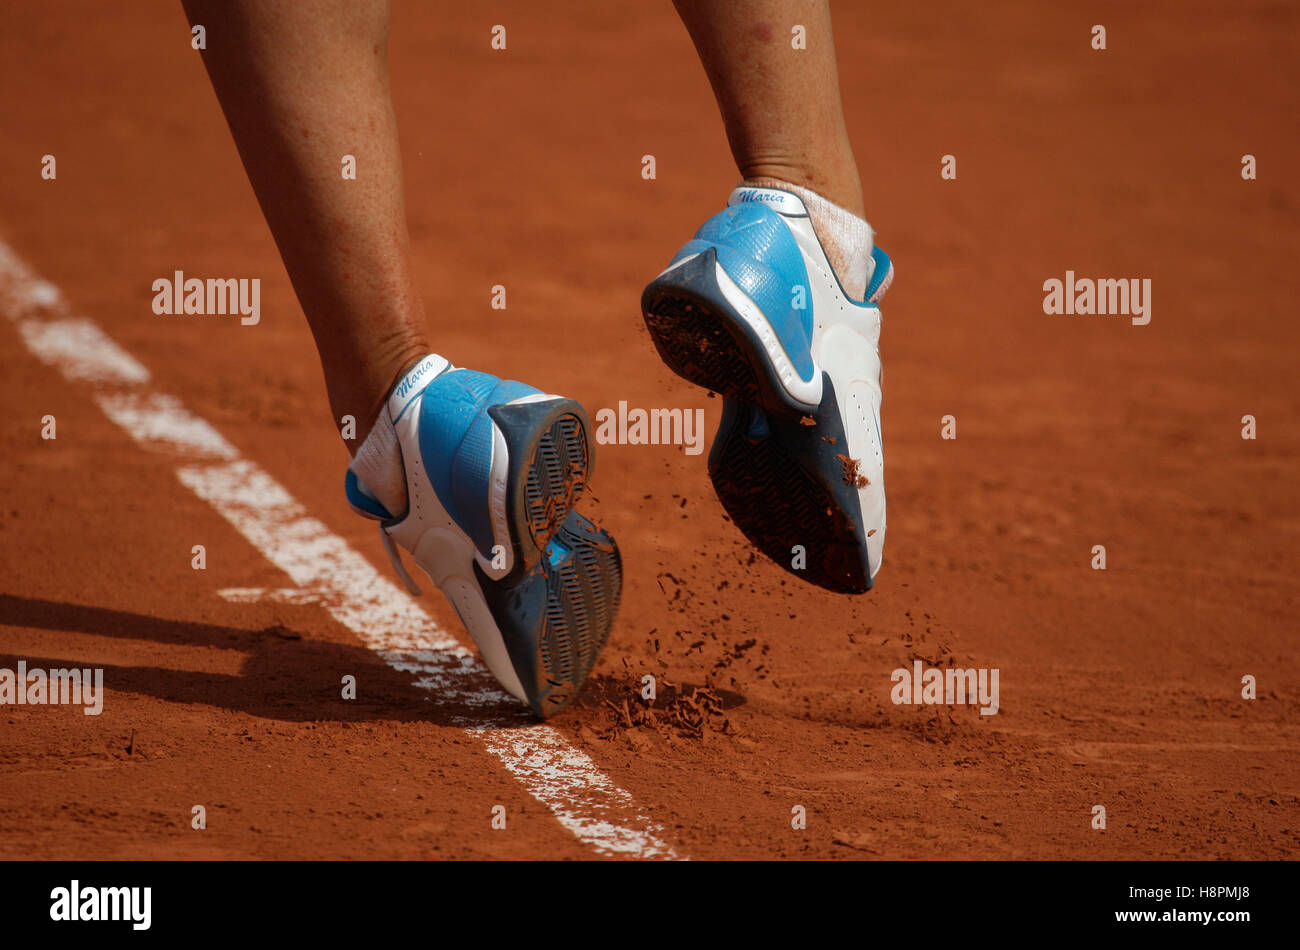 Pieds de Maria Sharapova, la Russie, à servir, tennis, l'ITF tournoi du Grand Chelem, Roland-Garros 2009, Roland Garros, Paris, France Banque D'Images